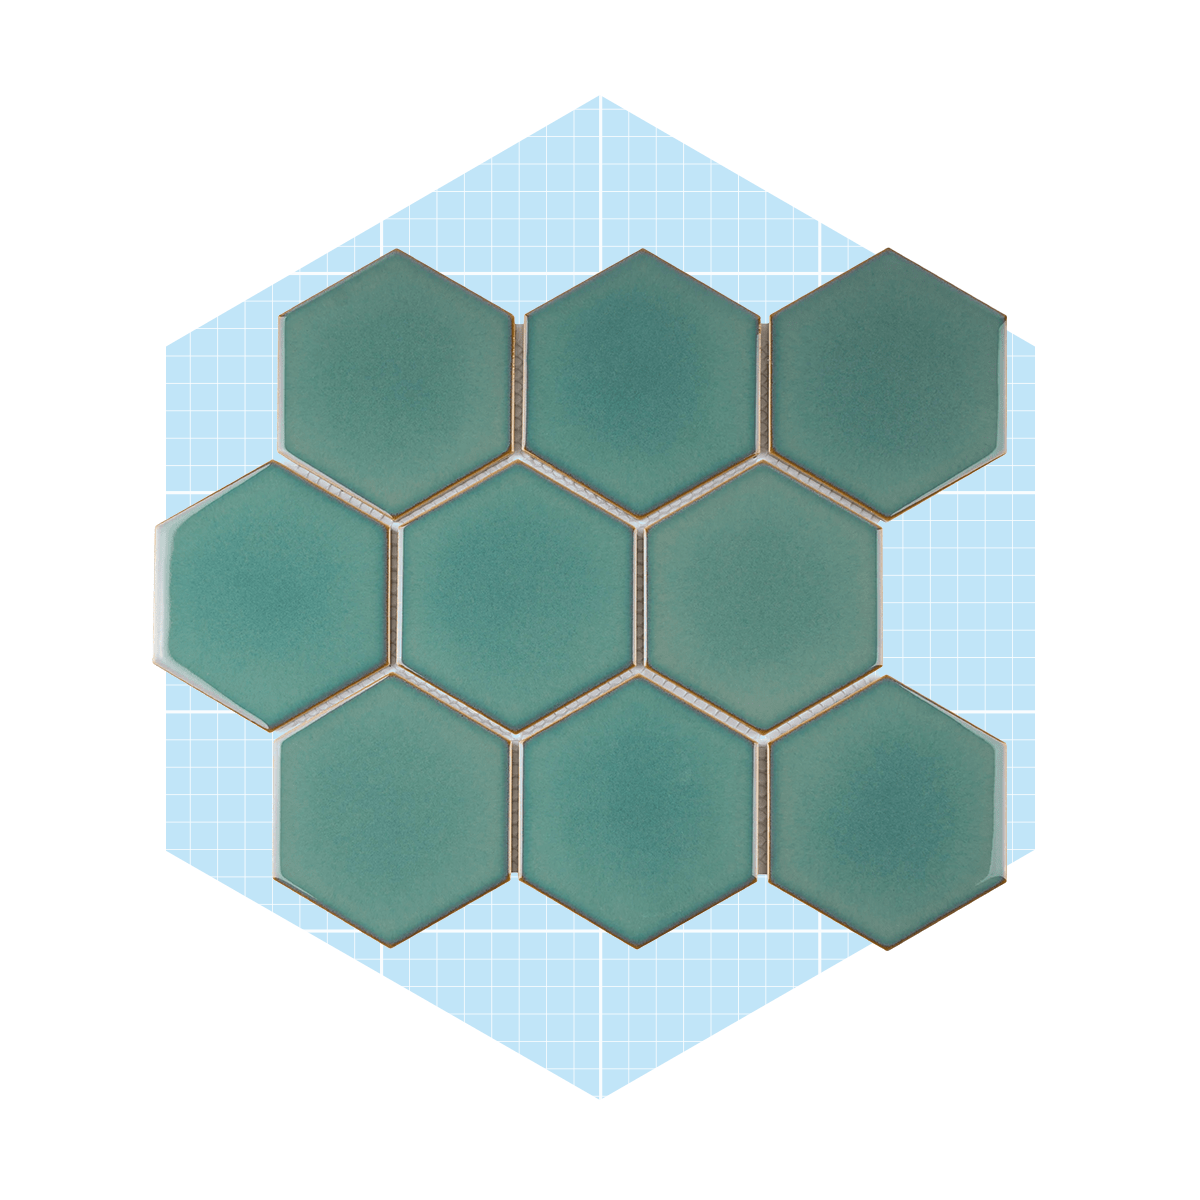 Honeycomb Mosaic Tiles Ecomm Via Wayfair.com